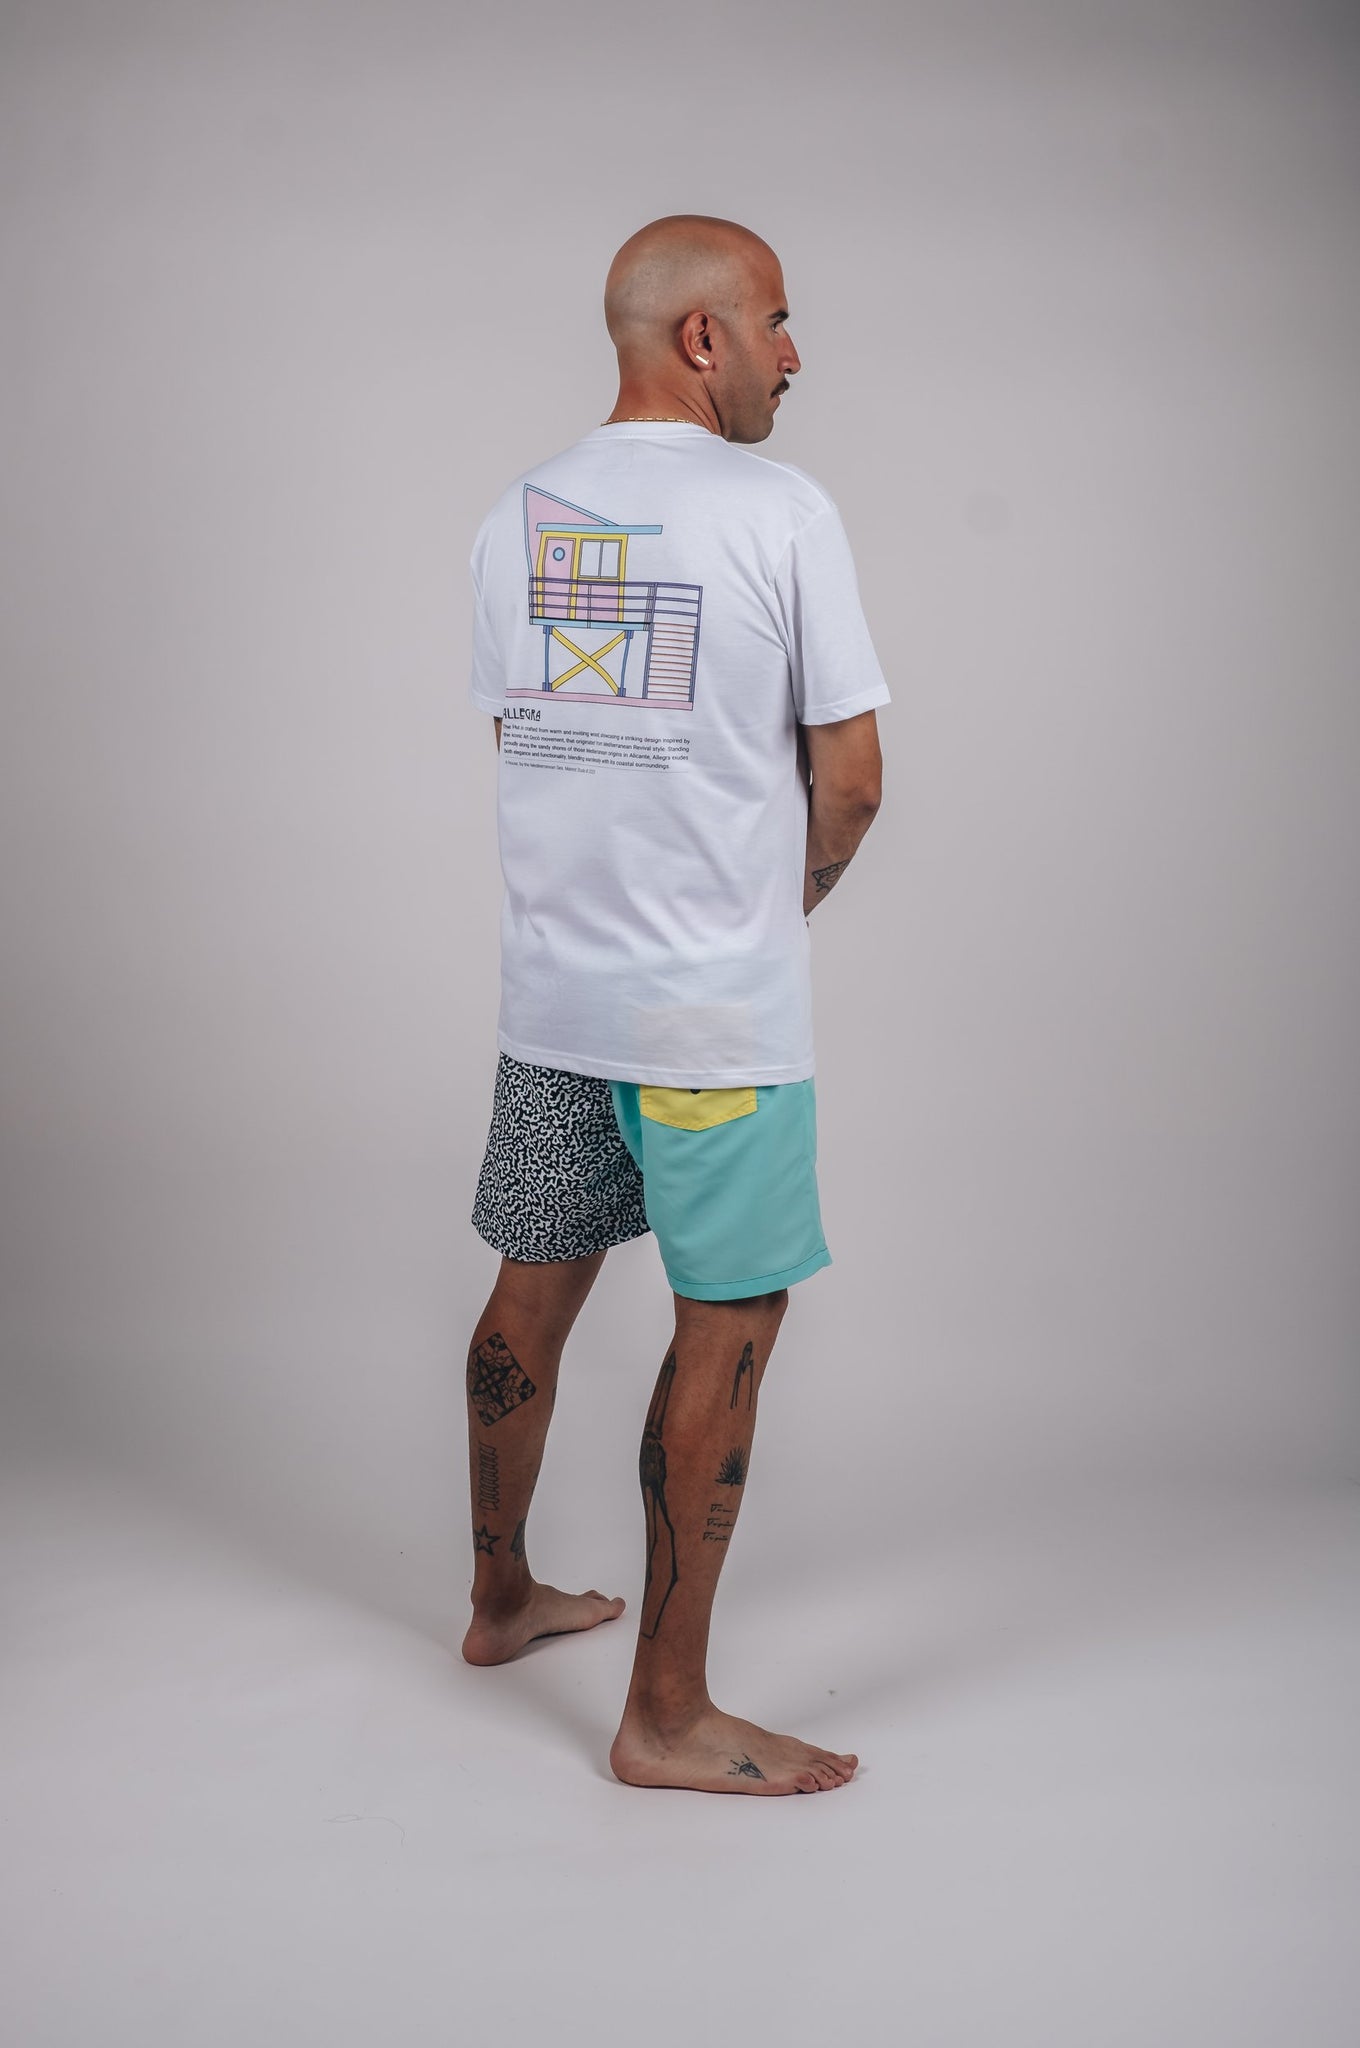 Antonyo Marest x Trendsplant Allegra Hut T-Shirt